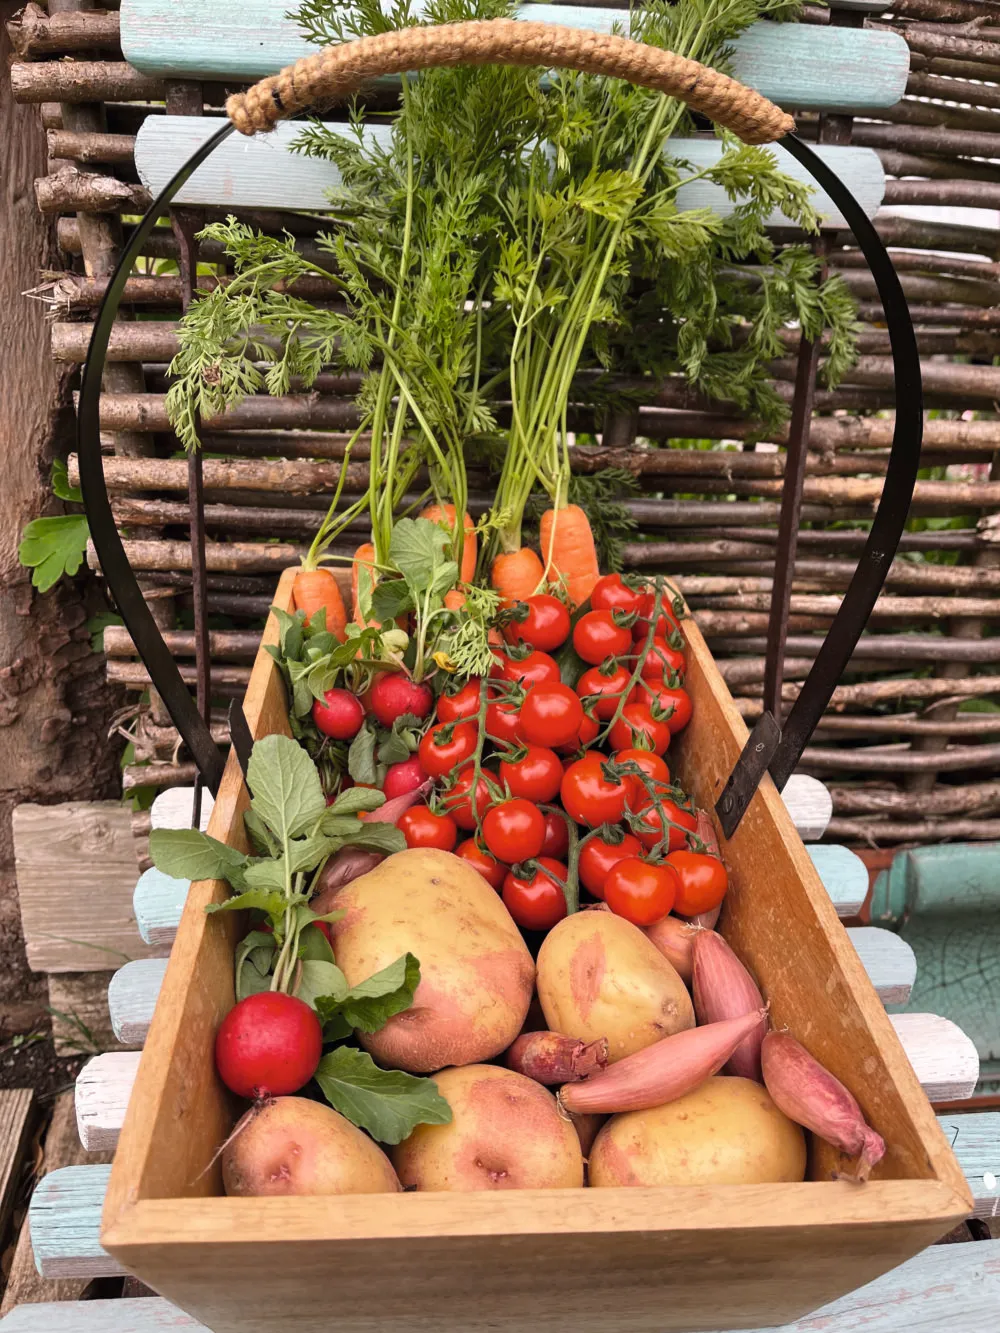 Harvesting produce